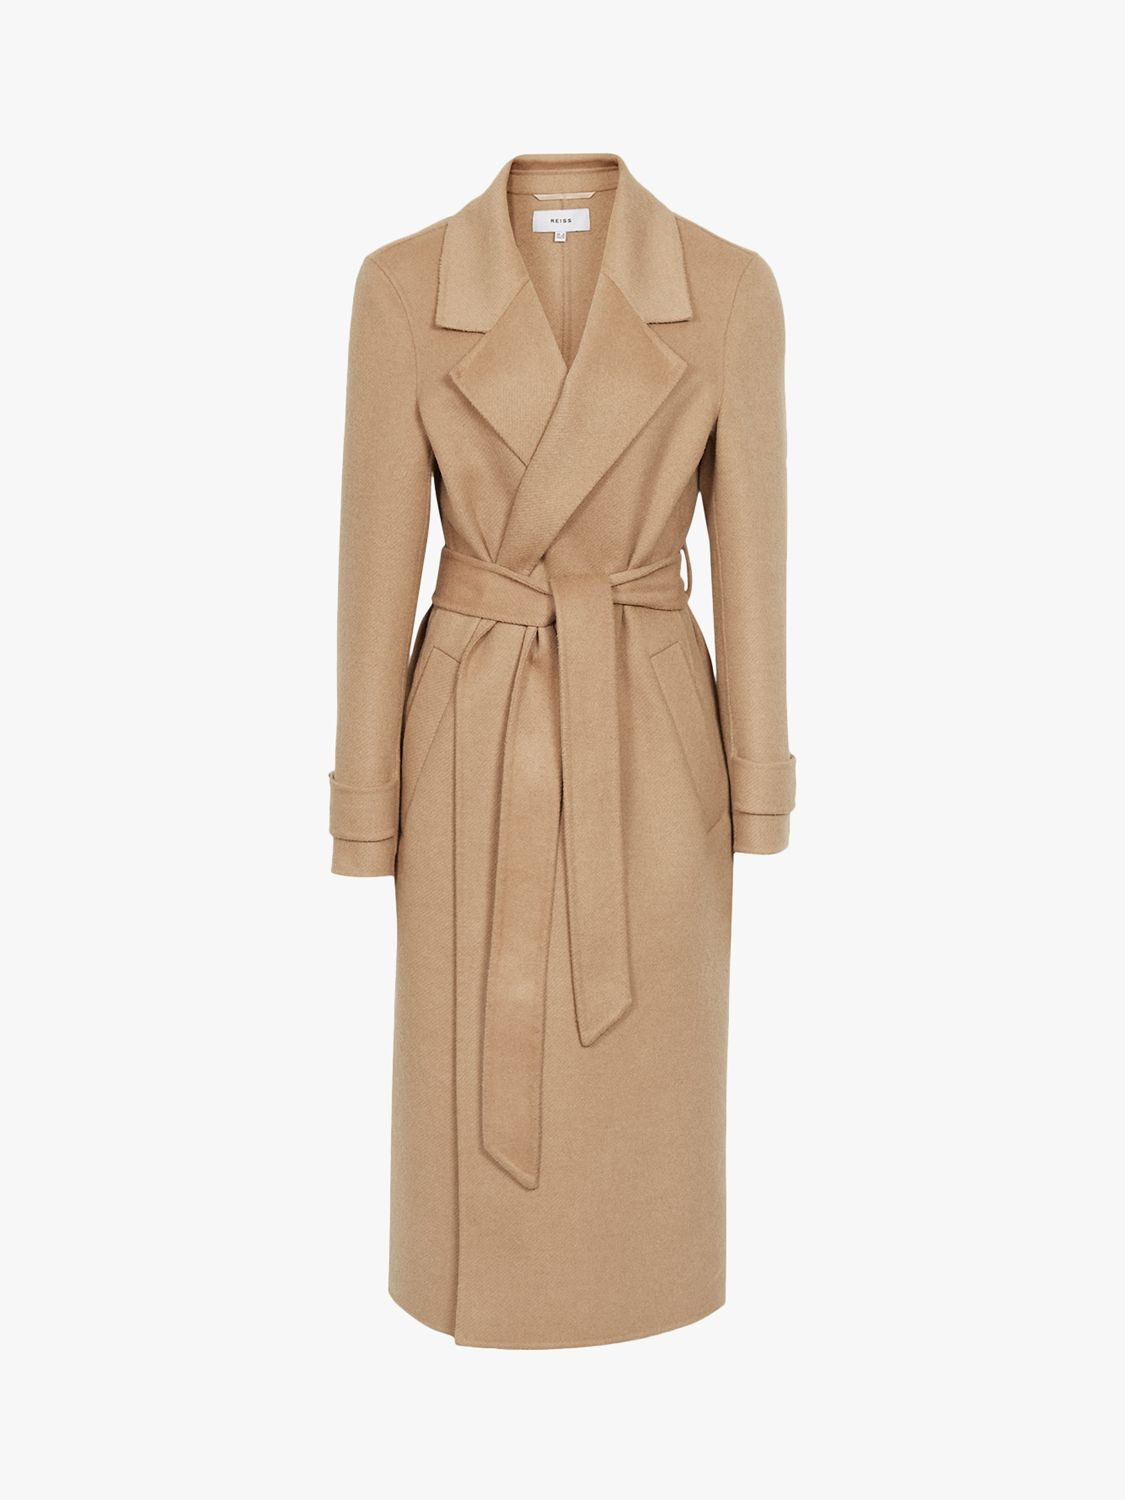 Reiss Leah Wool Blend Longline Coat, Camel at John Lewis & Partners